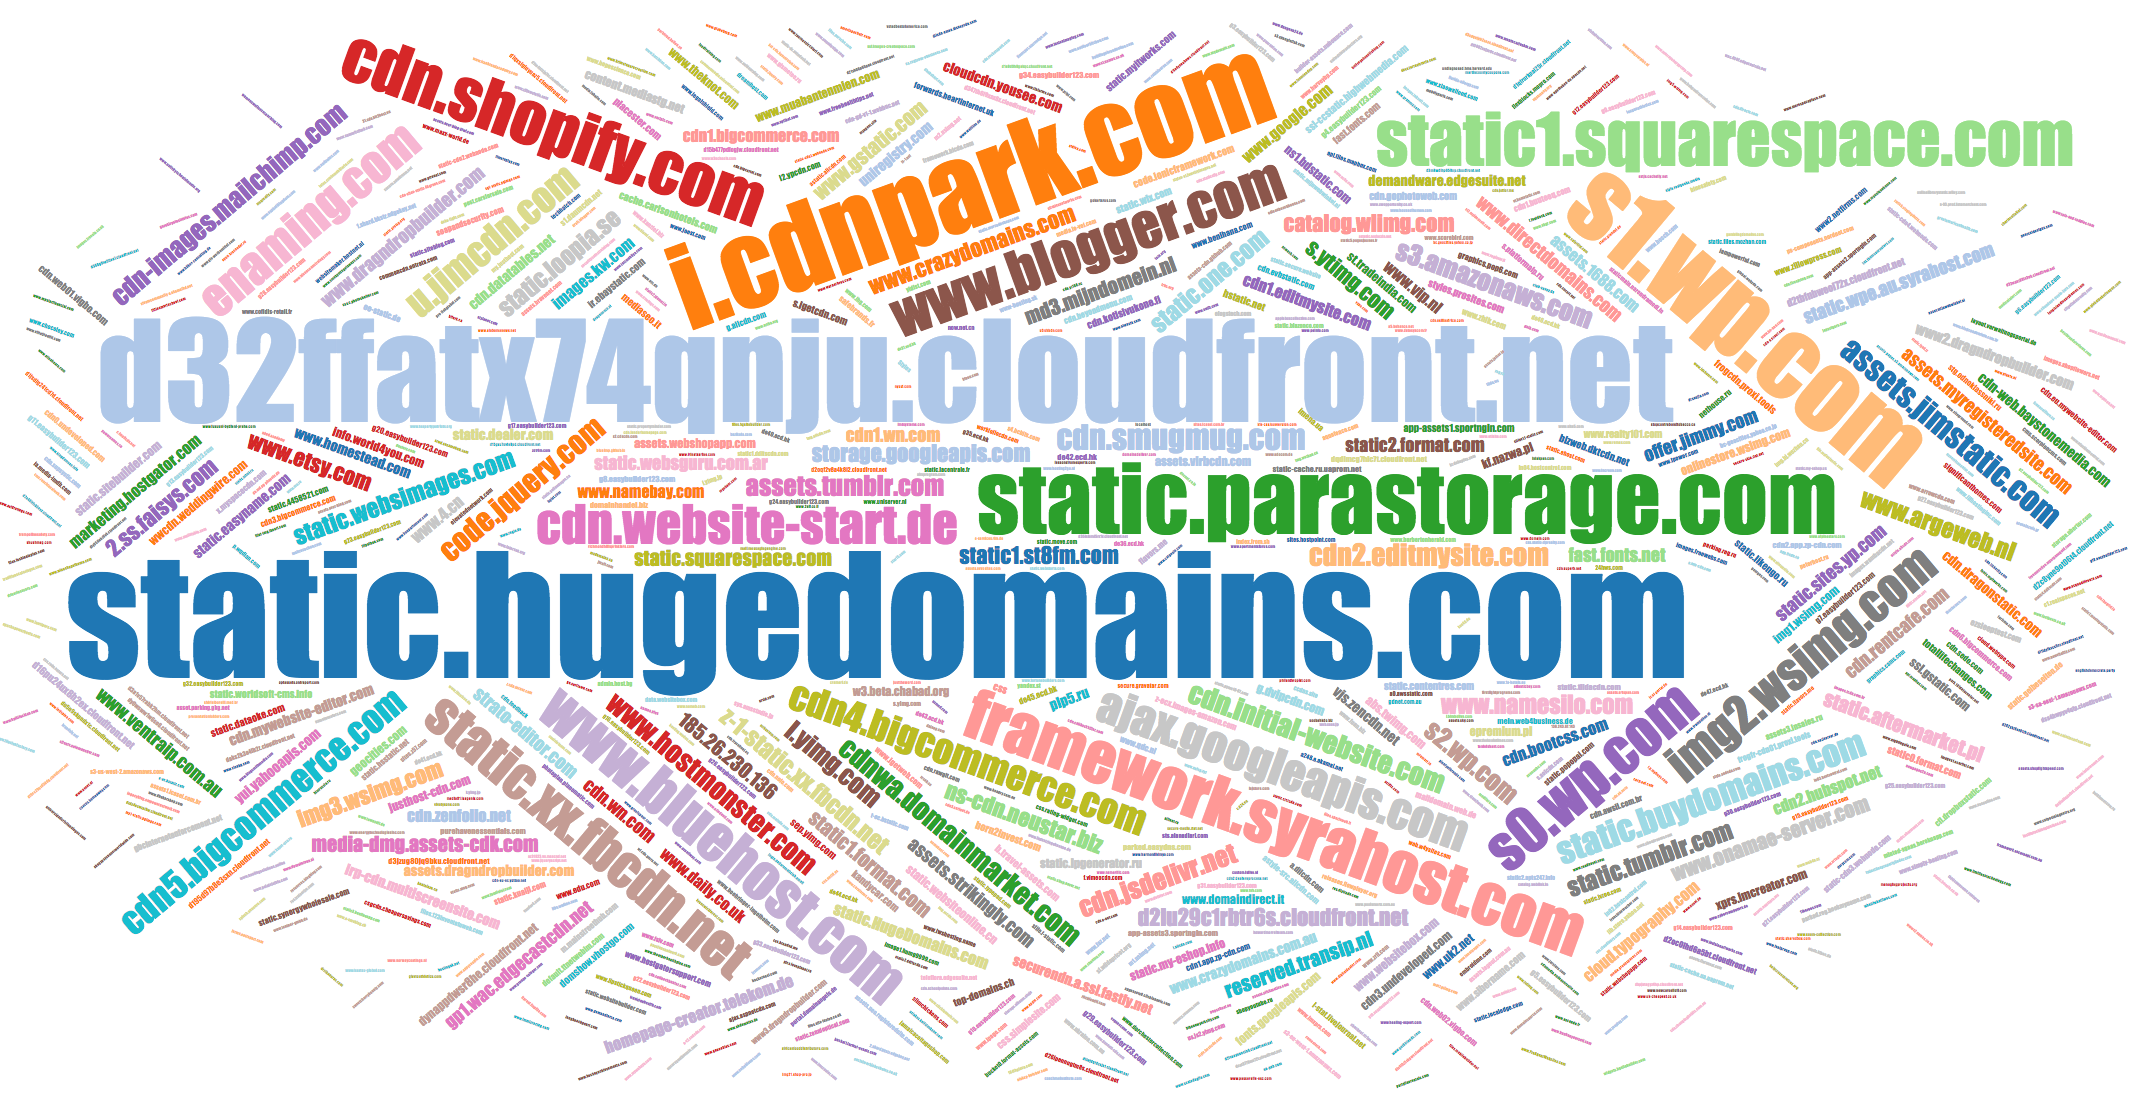 Popular names of CSS domains placester.com, park.101datacenter.net, etc.